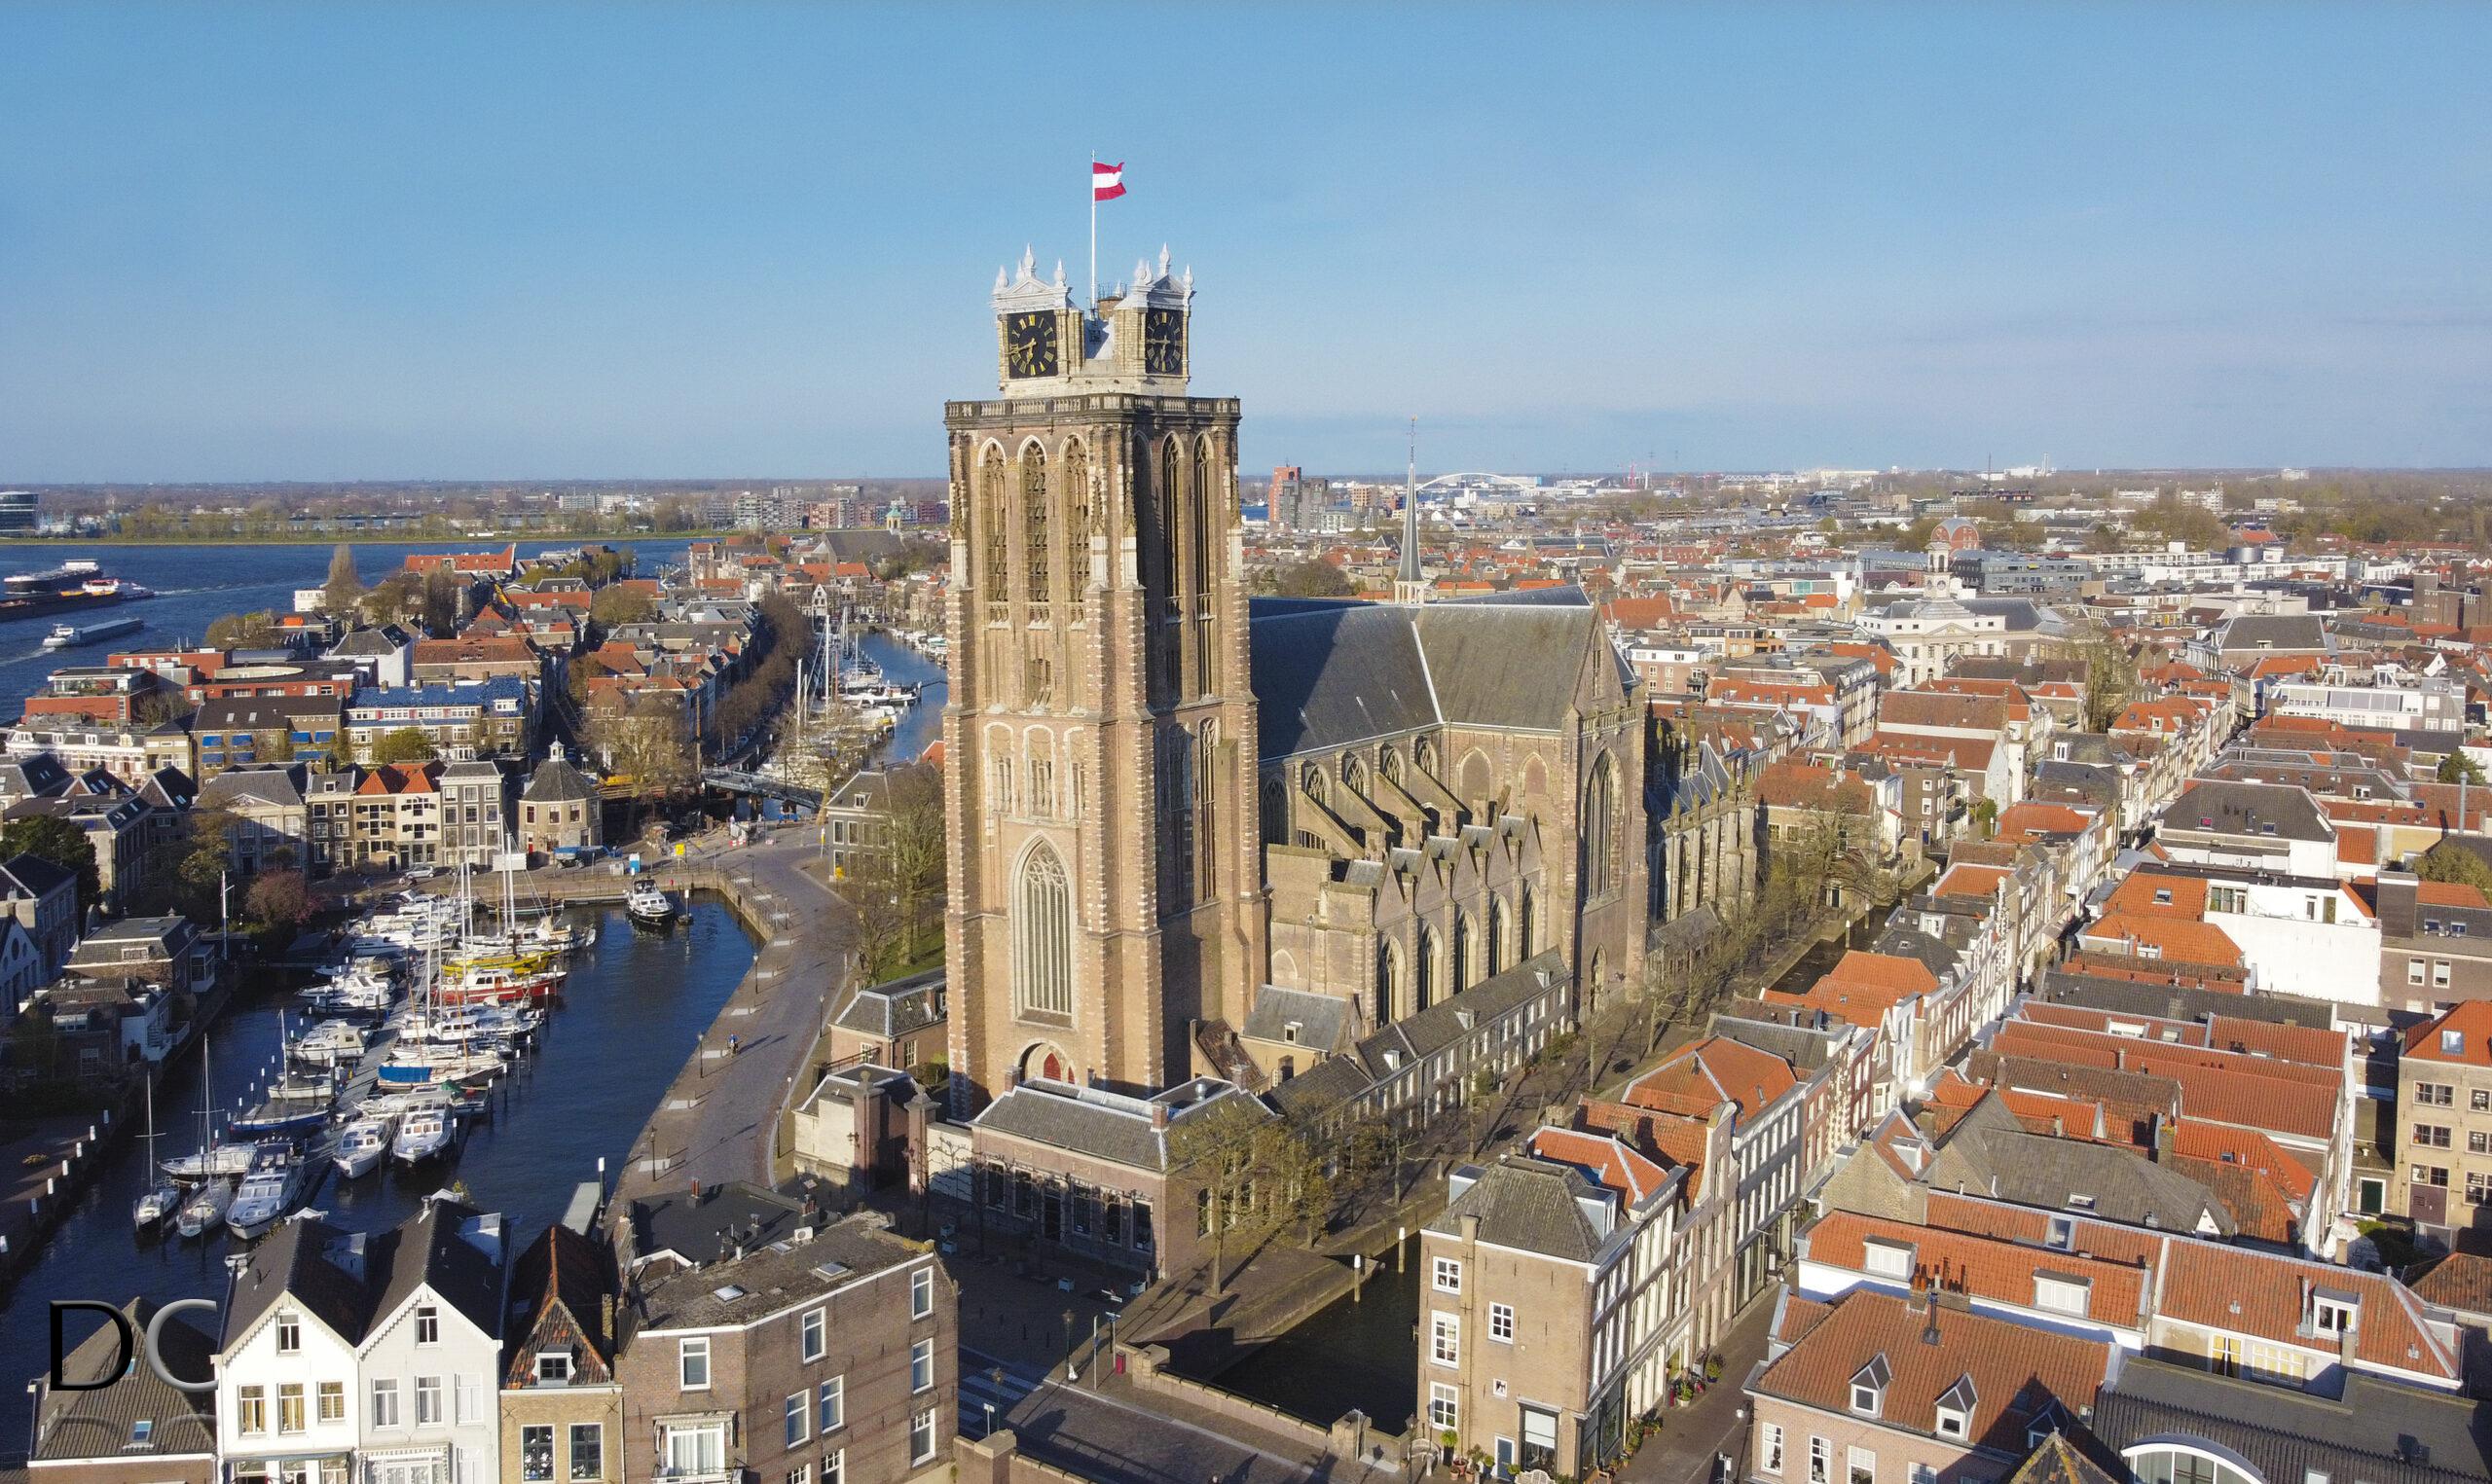 Visit the big church in Dordrecht